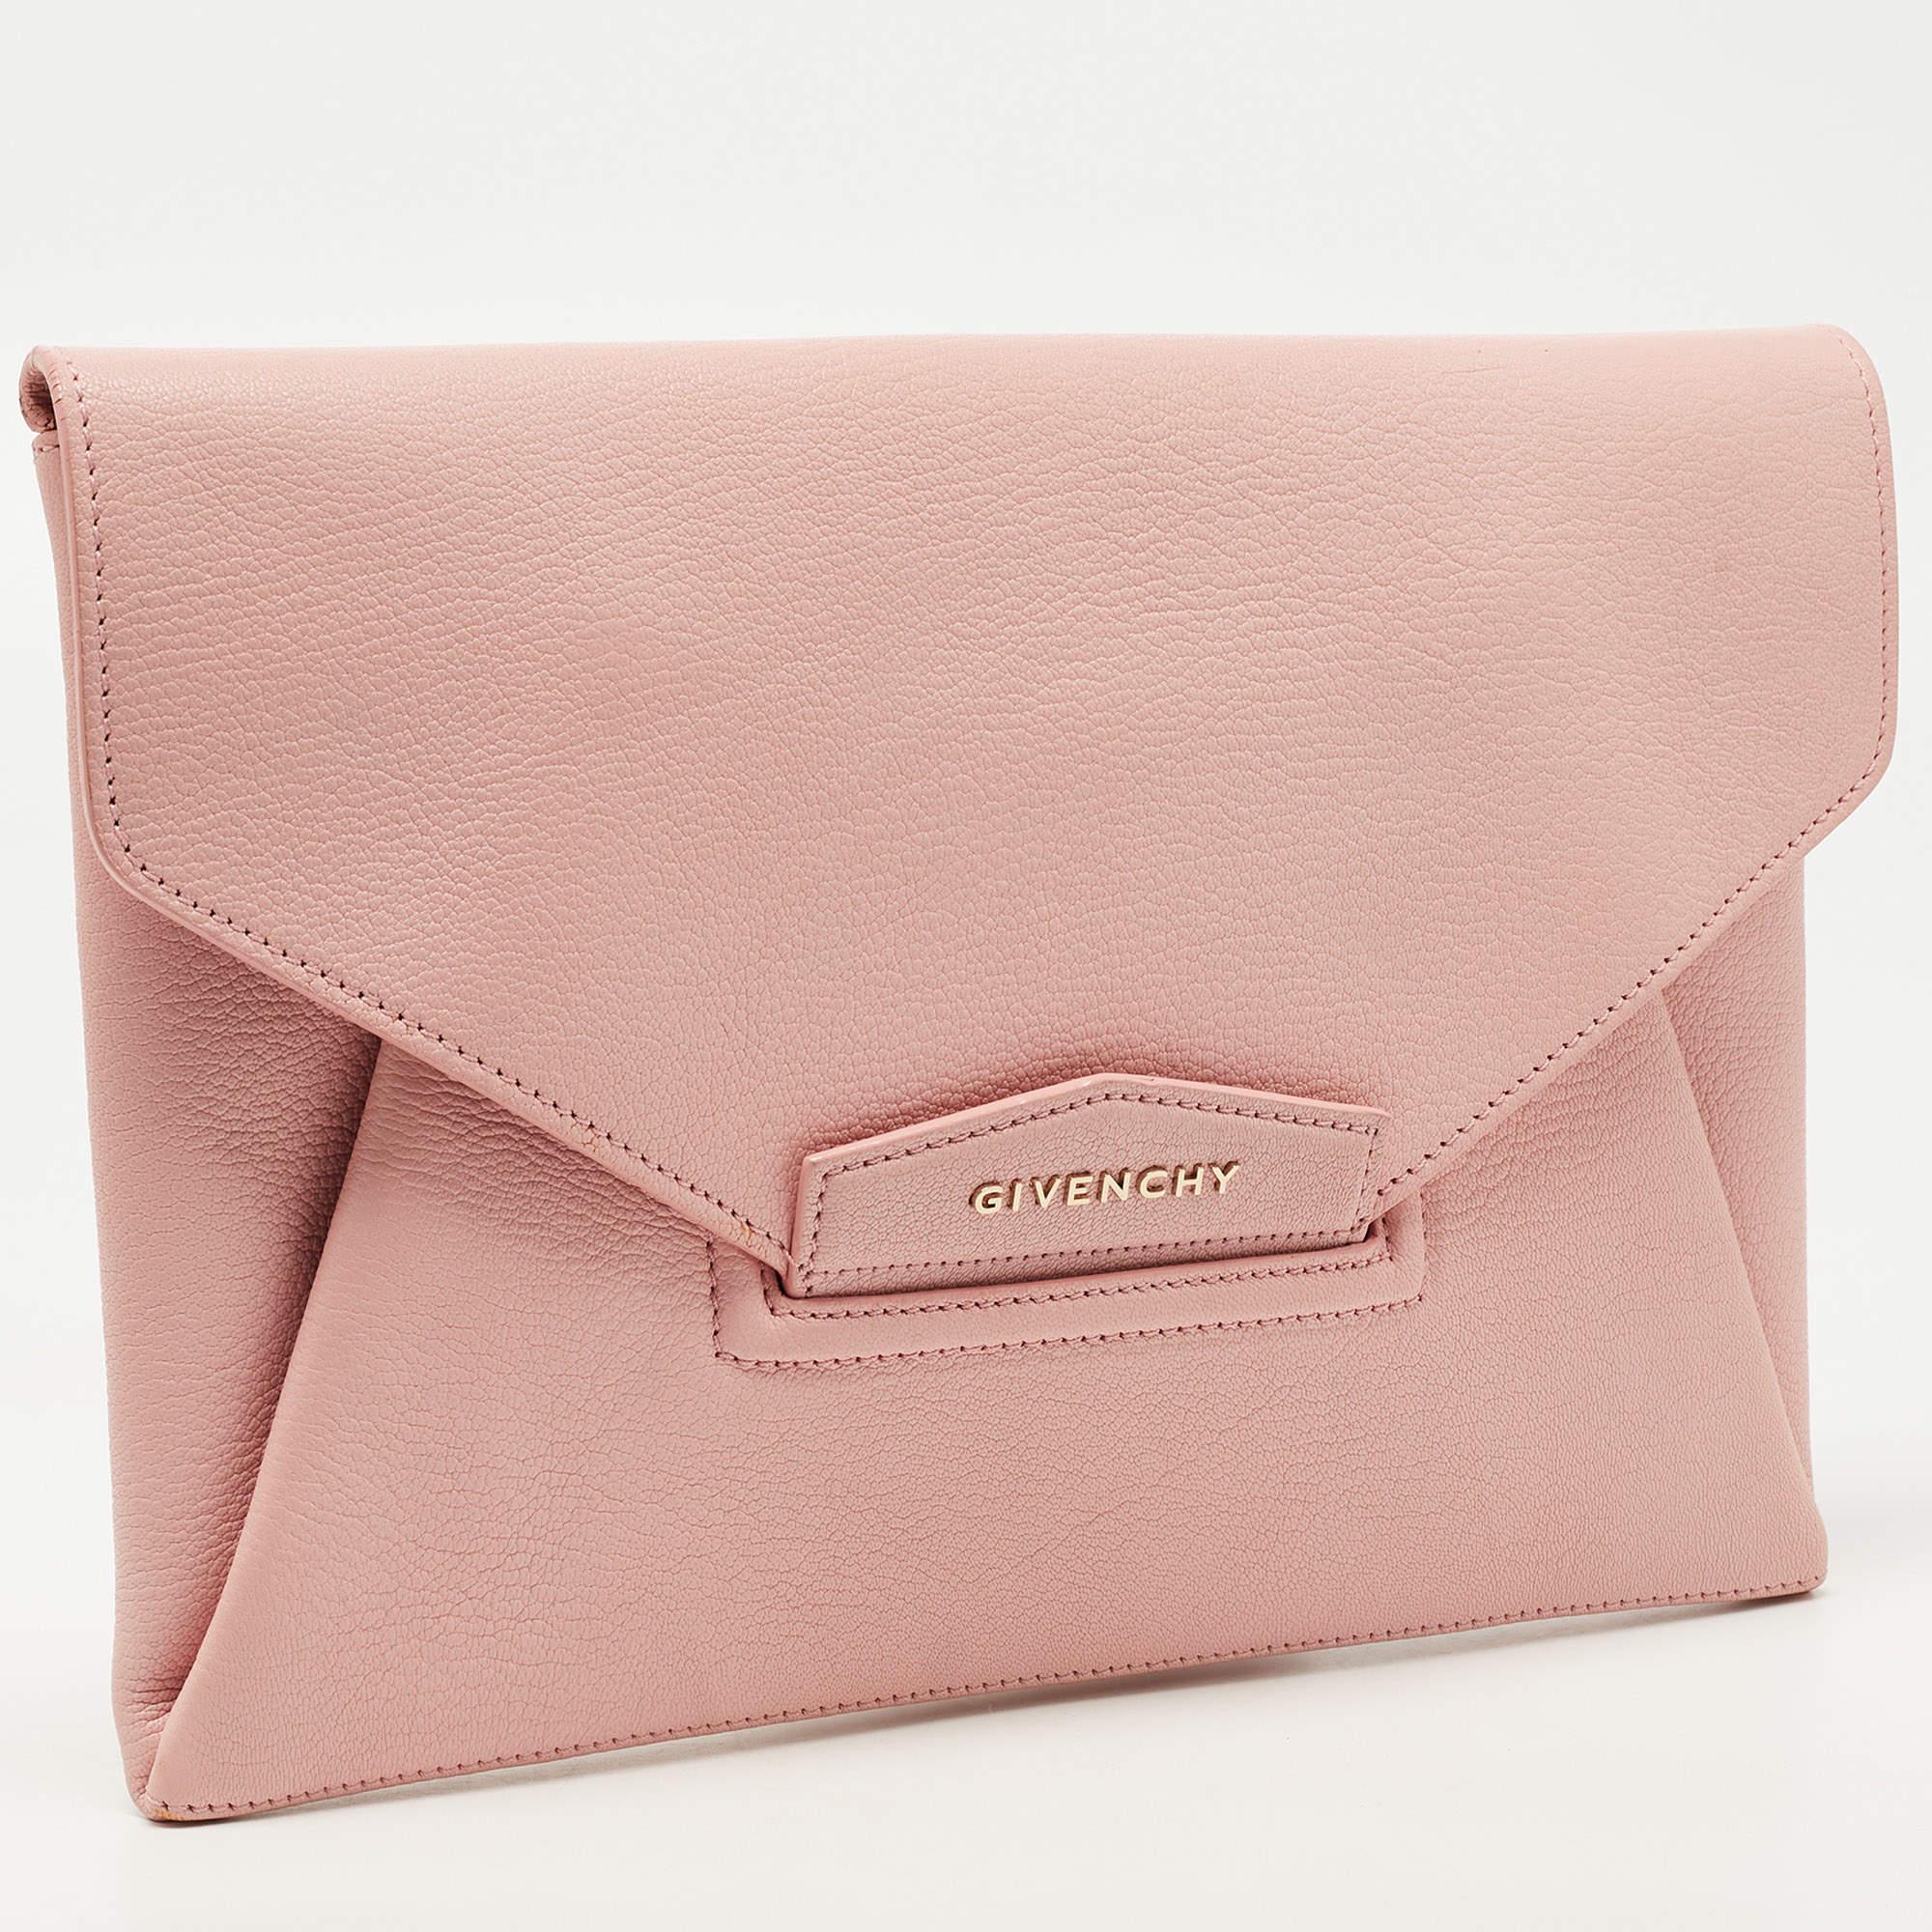 Women's Givenchy Light Pink Leather Antigona Envelope Clutch